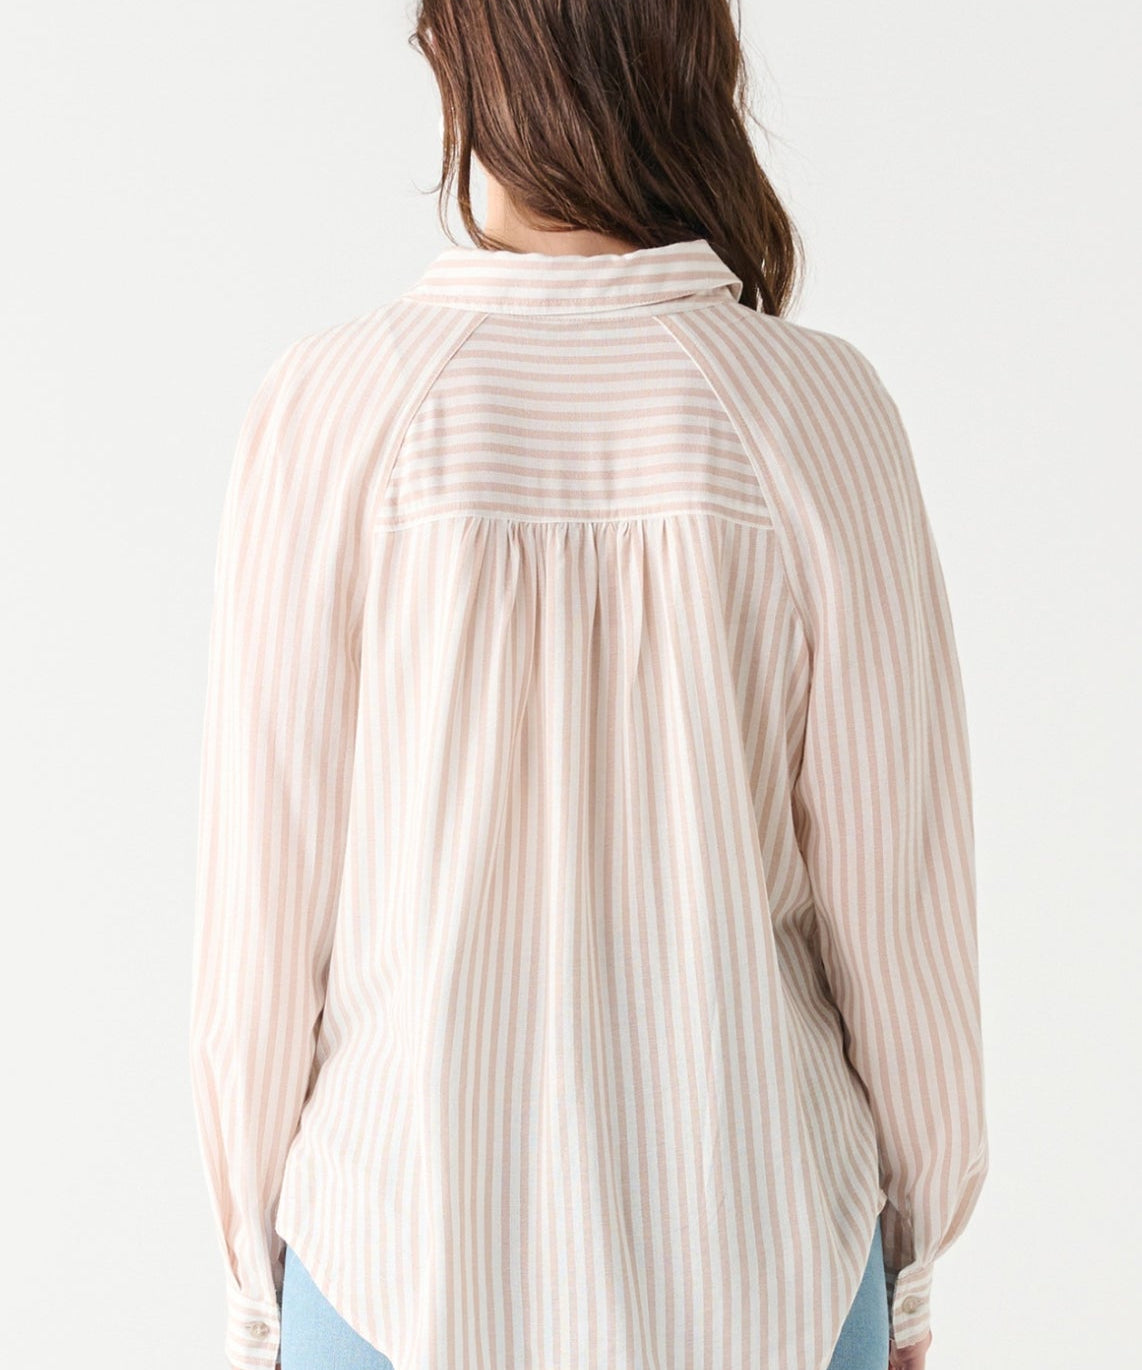 Striped raglan sleeved shirt by Black Tape - Blue Sky Fashions & Lingerie